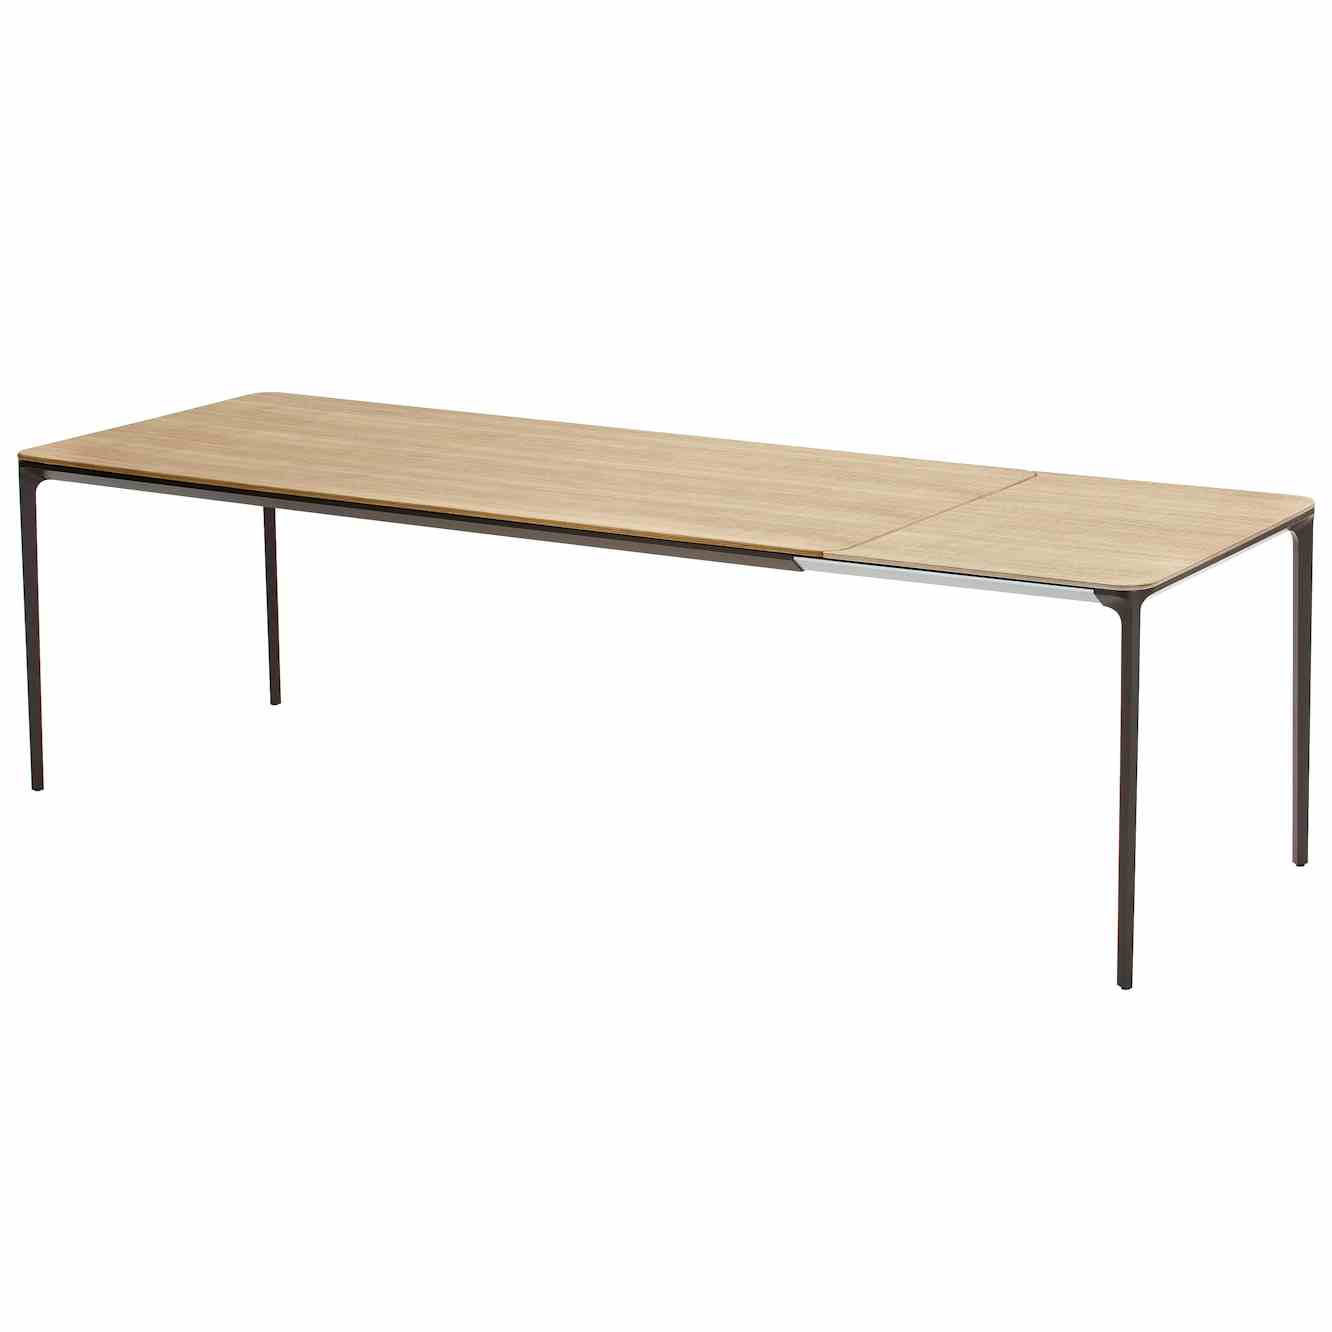 Sovet-slim-extensible-wood-dining-table-thumbnail-haute-living